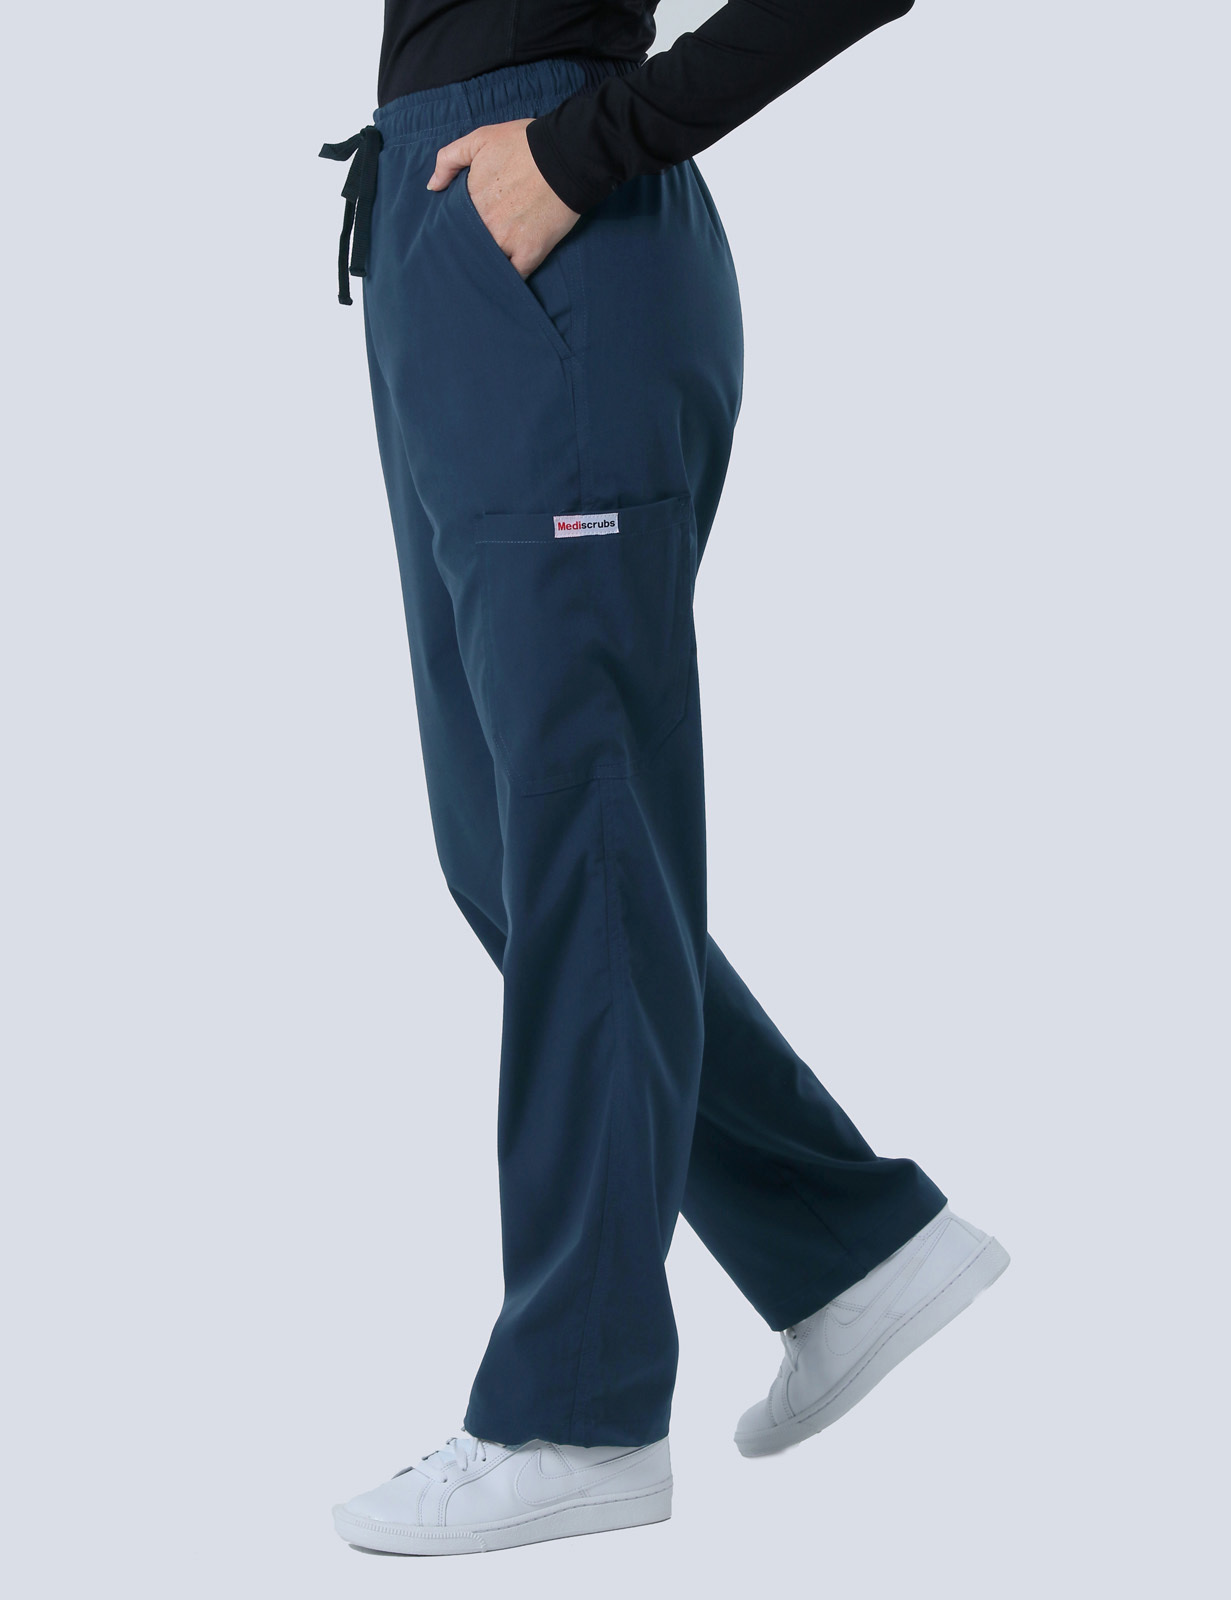 Mackay Hospital - ED RN (4 Pocket Scrub Top and Cargo Pants in Navy incl Logos)